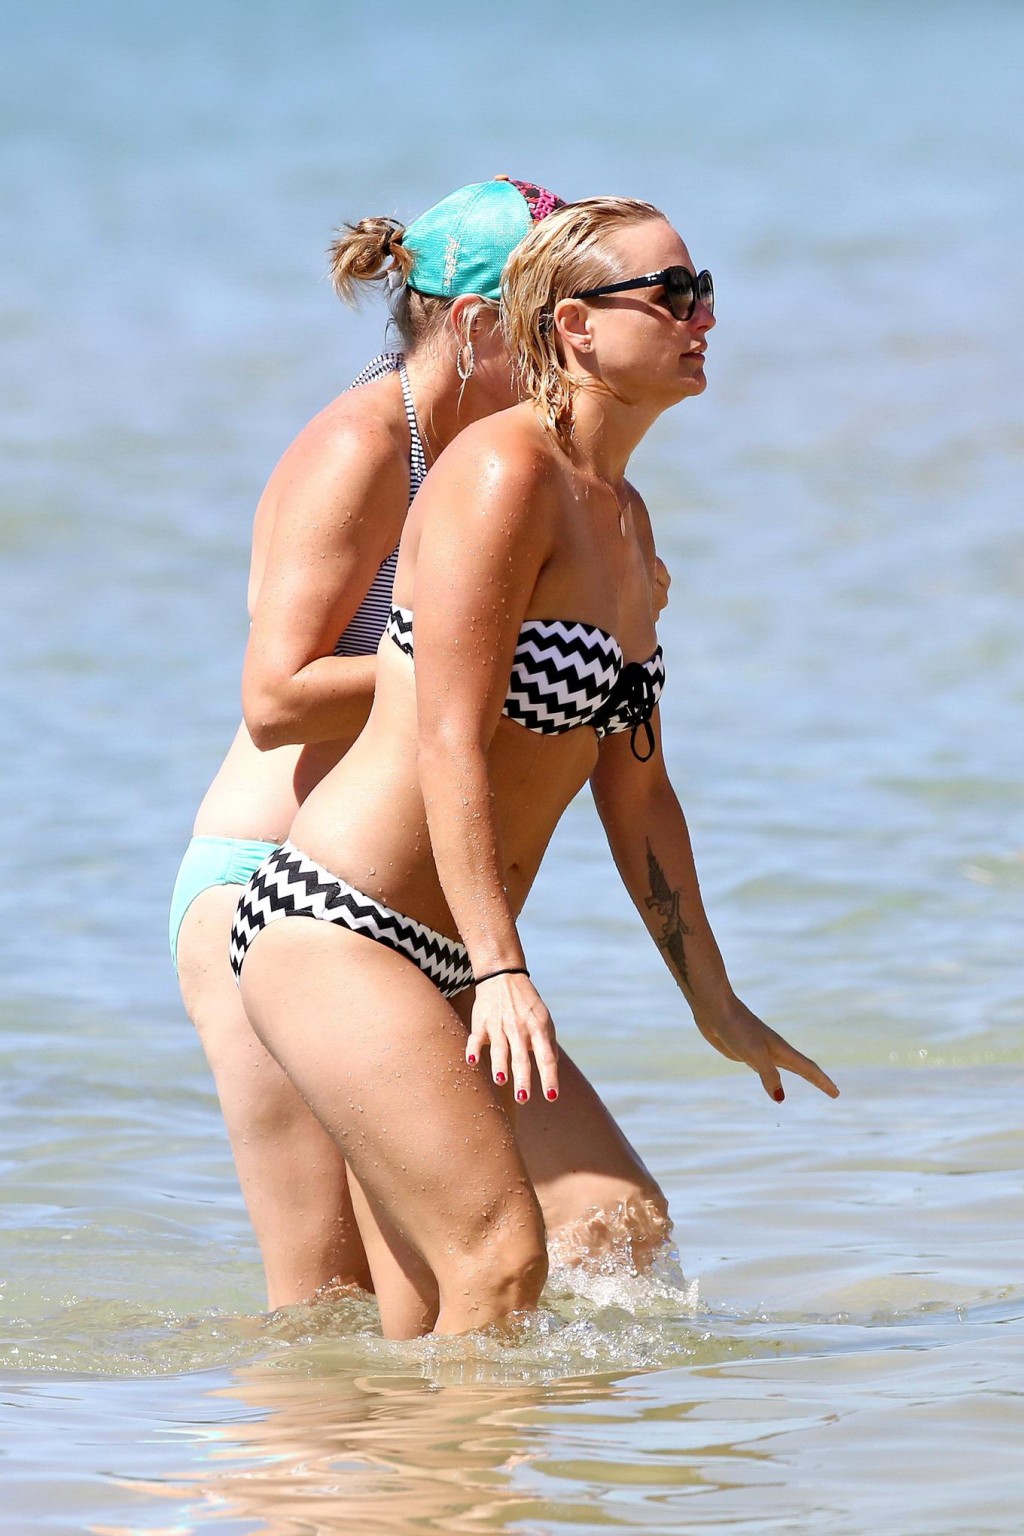 Miranda lambert con un bikini monocromo sin tirantes en una playa de hawaii
 #75185158